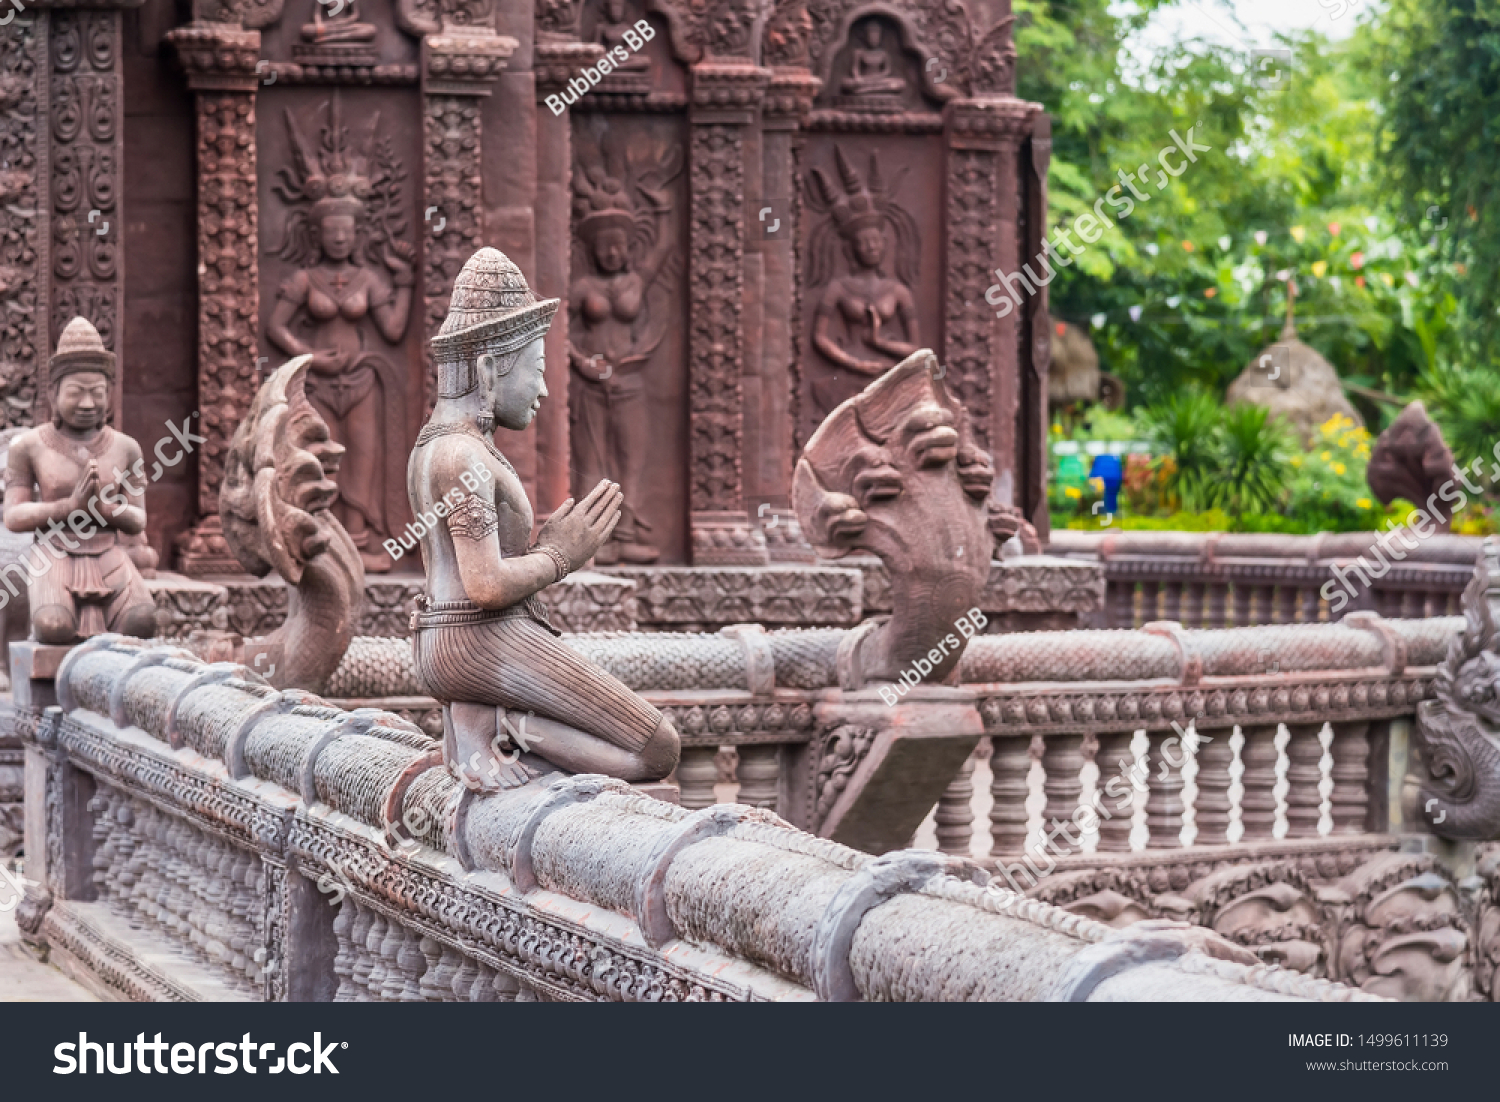 Stucco ancient. Stucco adorn ancient sanctuary. Huay Kaew temple in Lopburi, Thailand #1499611139